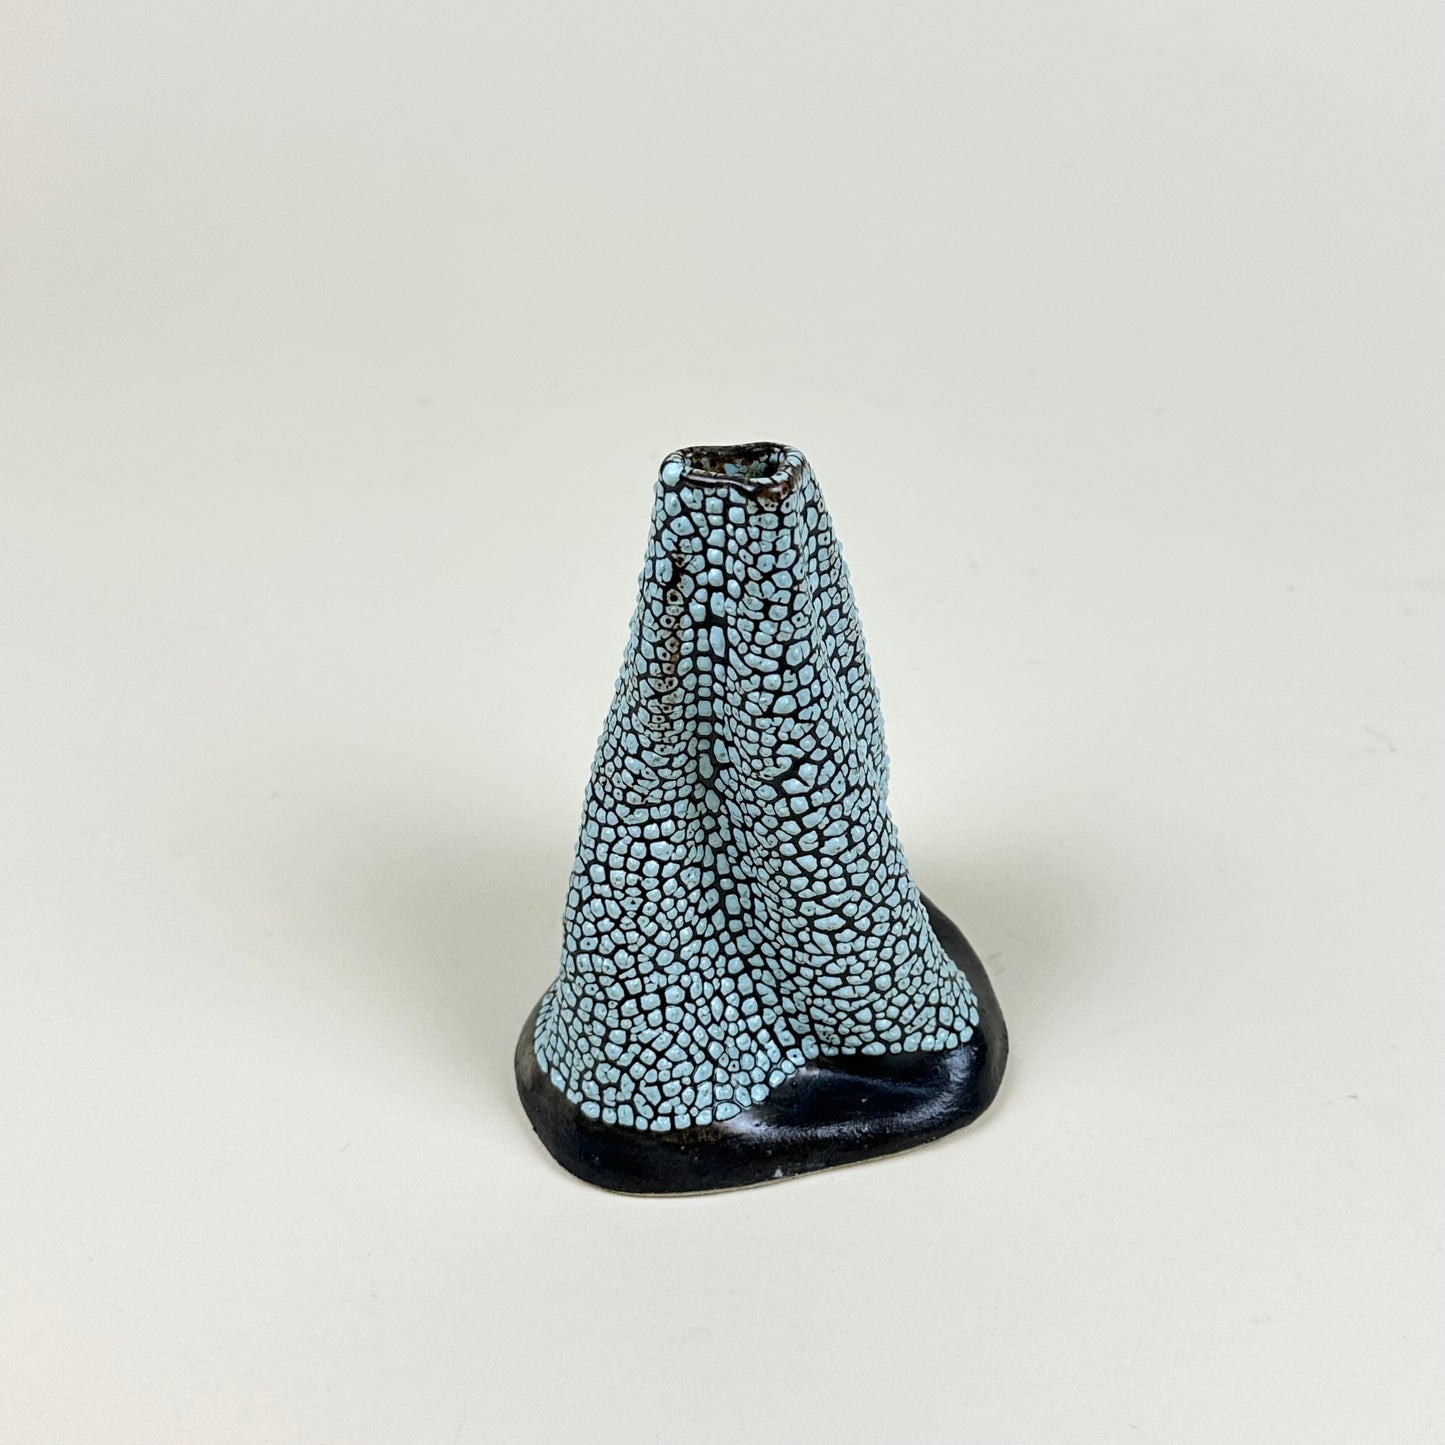 Black and light blue volcano vase (L) by Astrid Öhman.